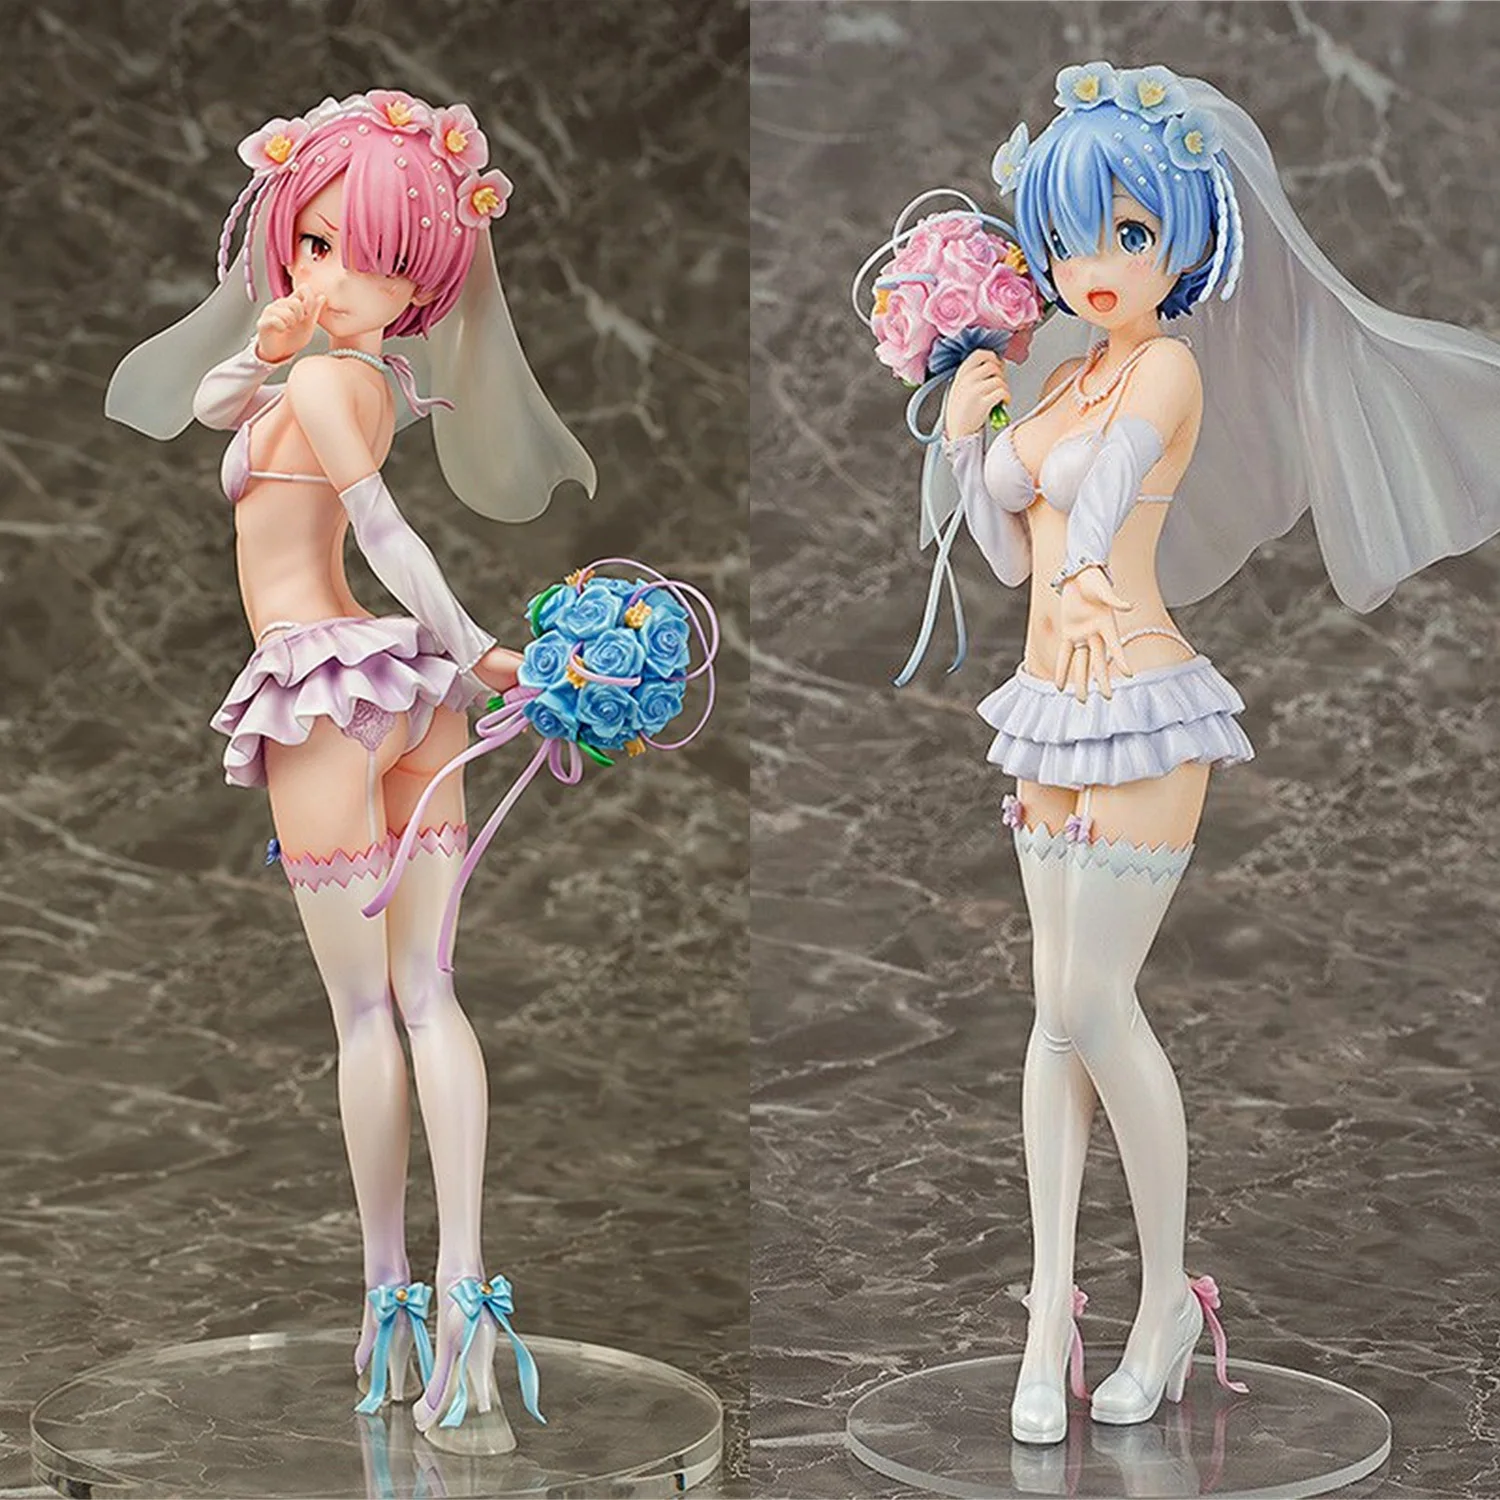 Adult Anime Figures Hentai - Japanese Adult Sex Anime Figures - Toys & Hobbies - AliExpress